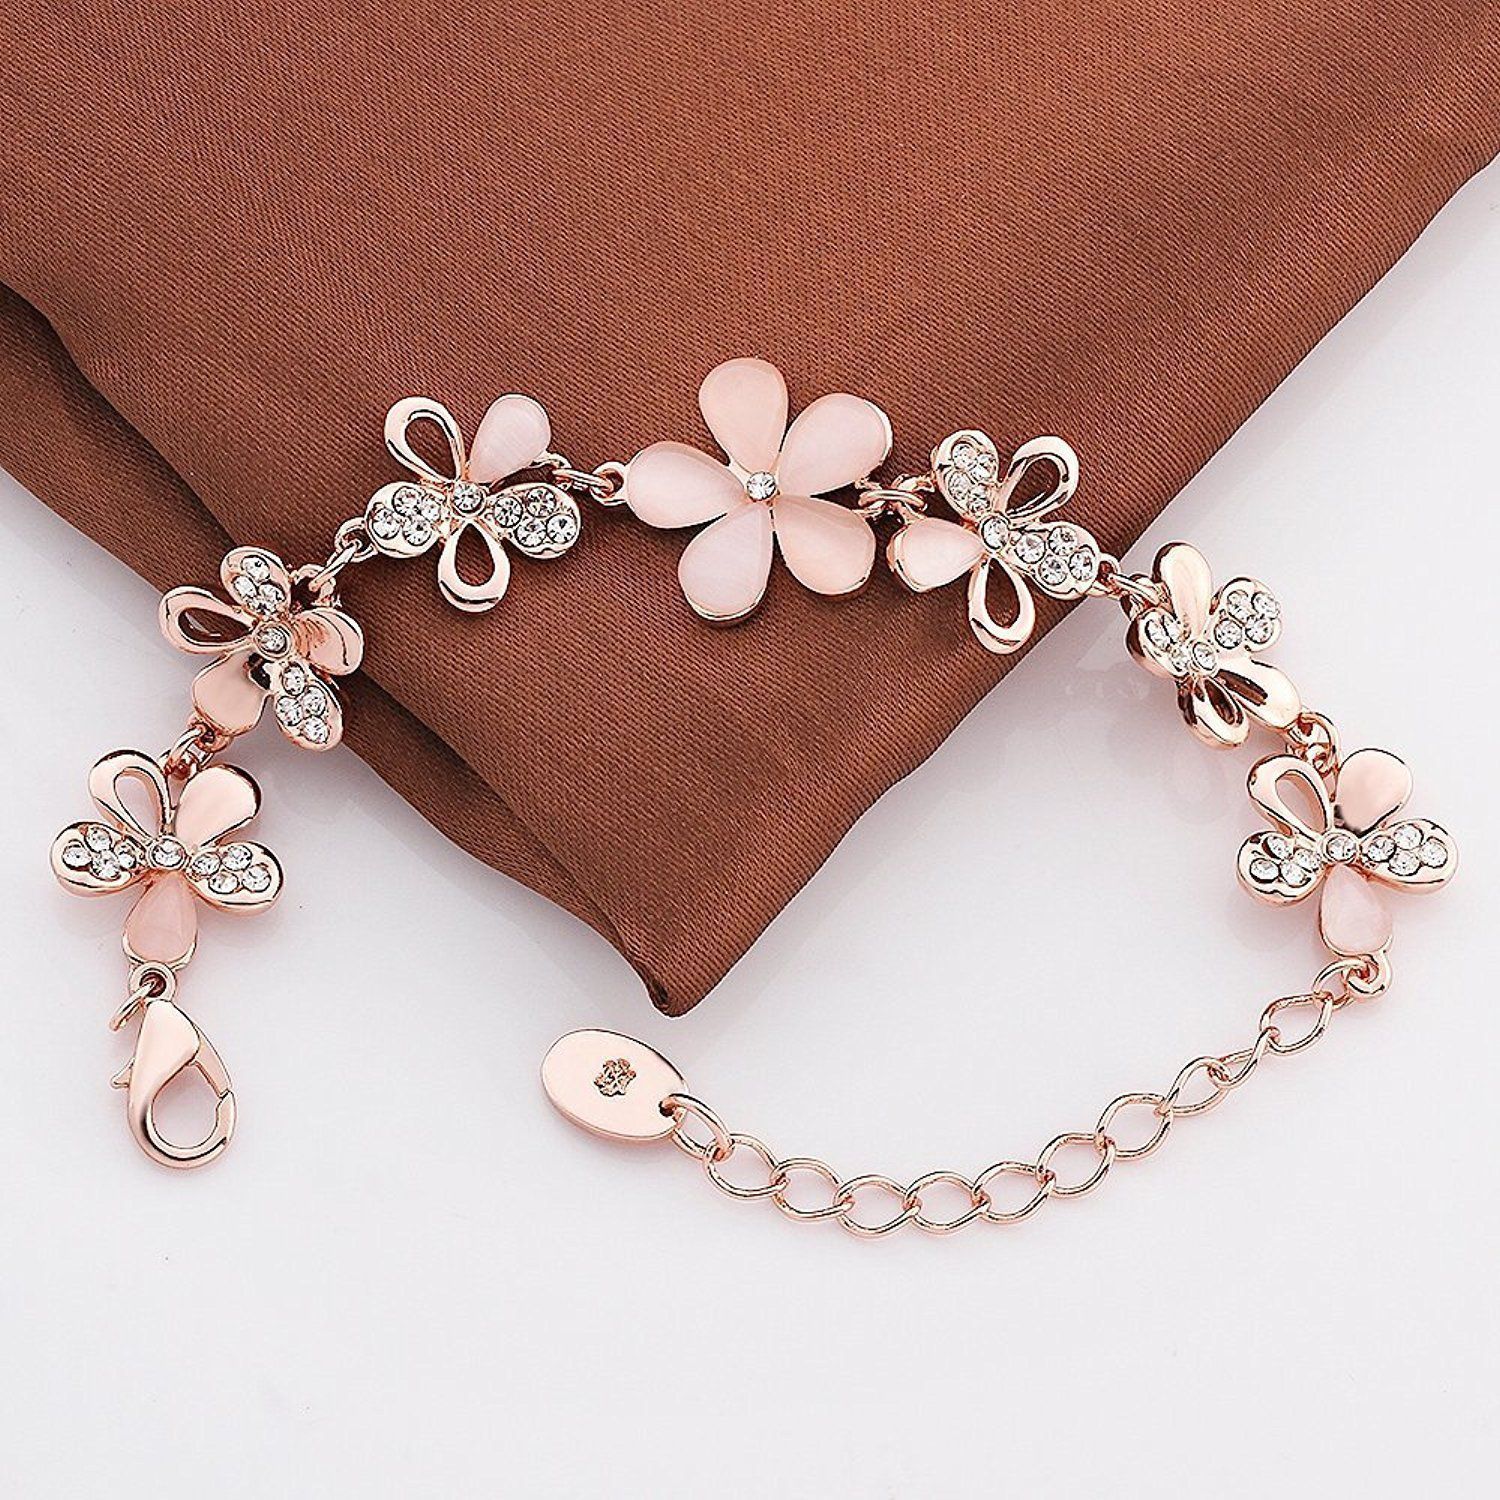 Enchanting Beauty: Silver Charm Bracelets for Women post thumbnail image